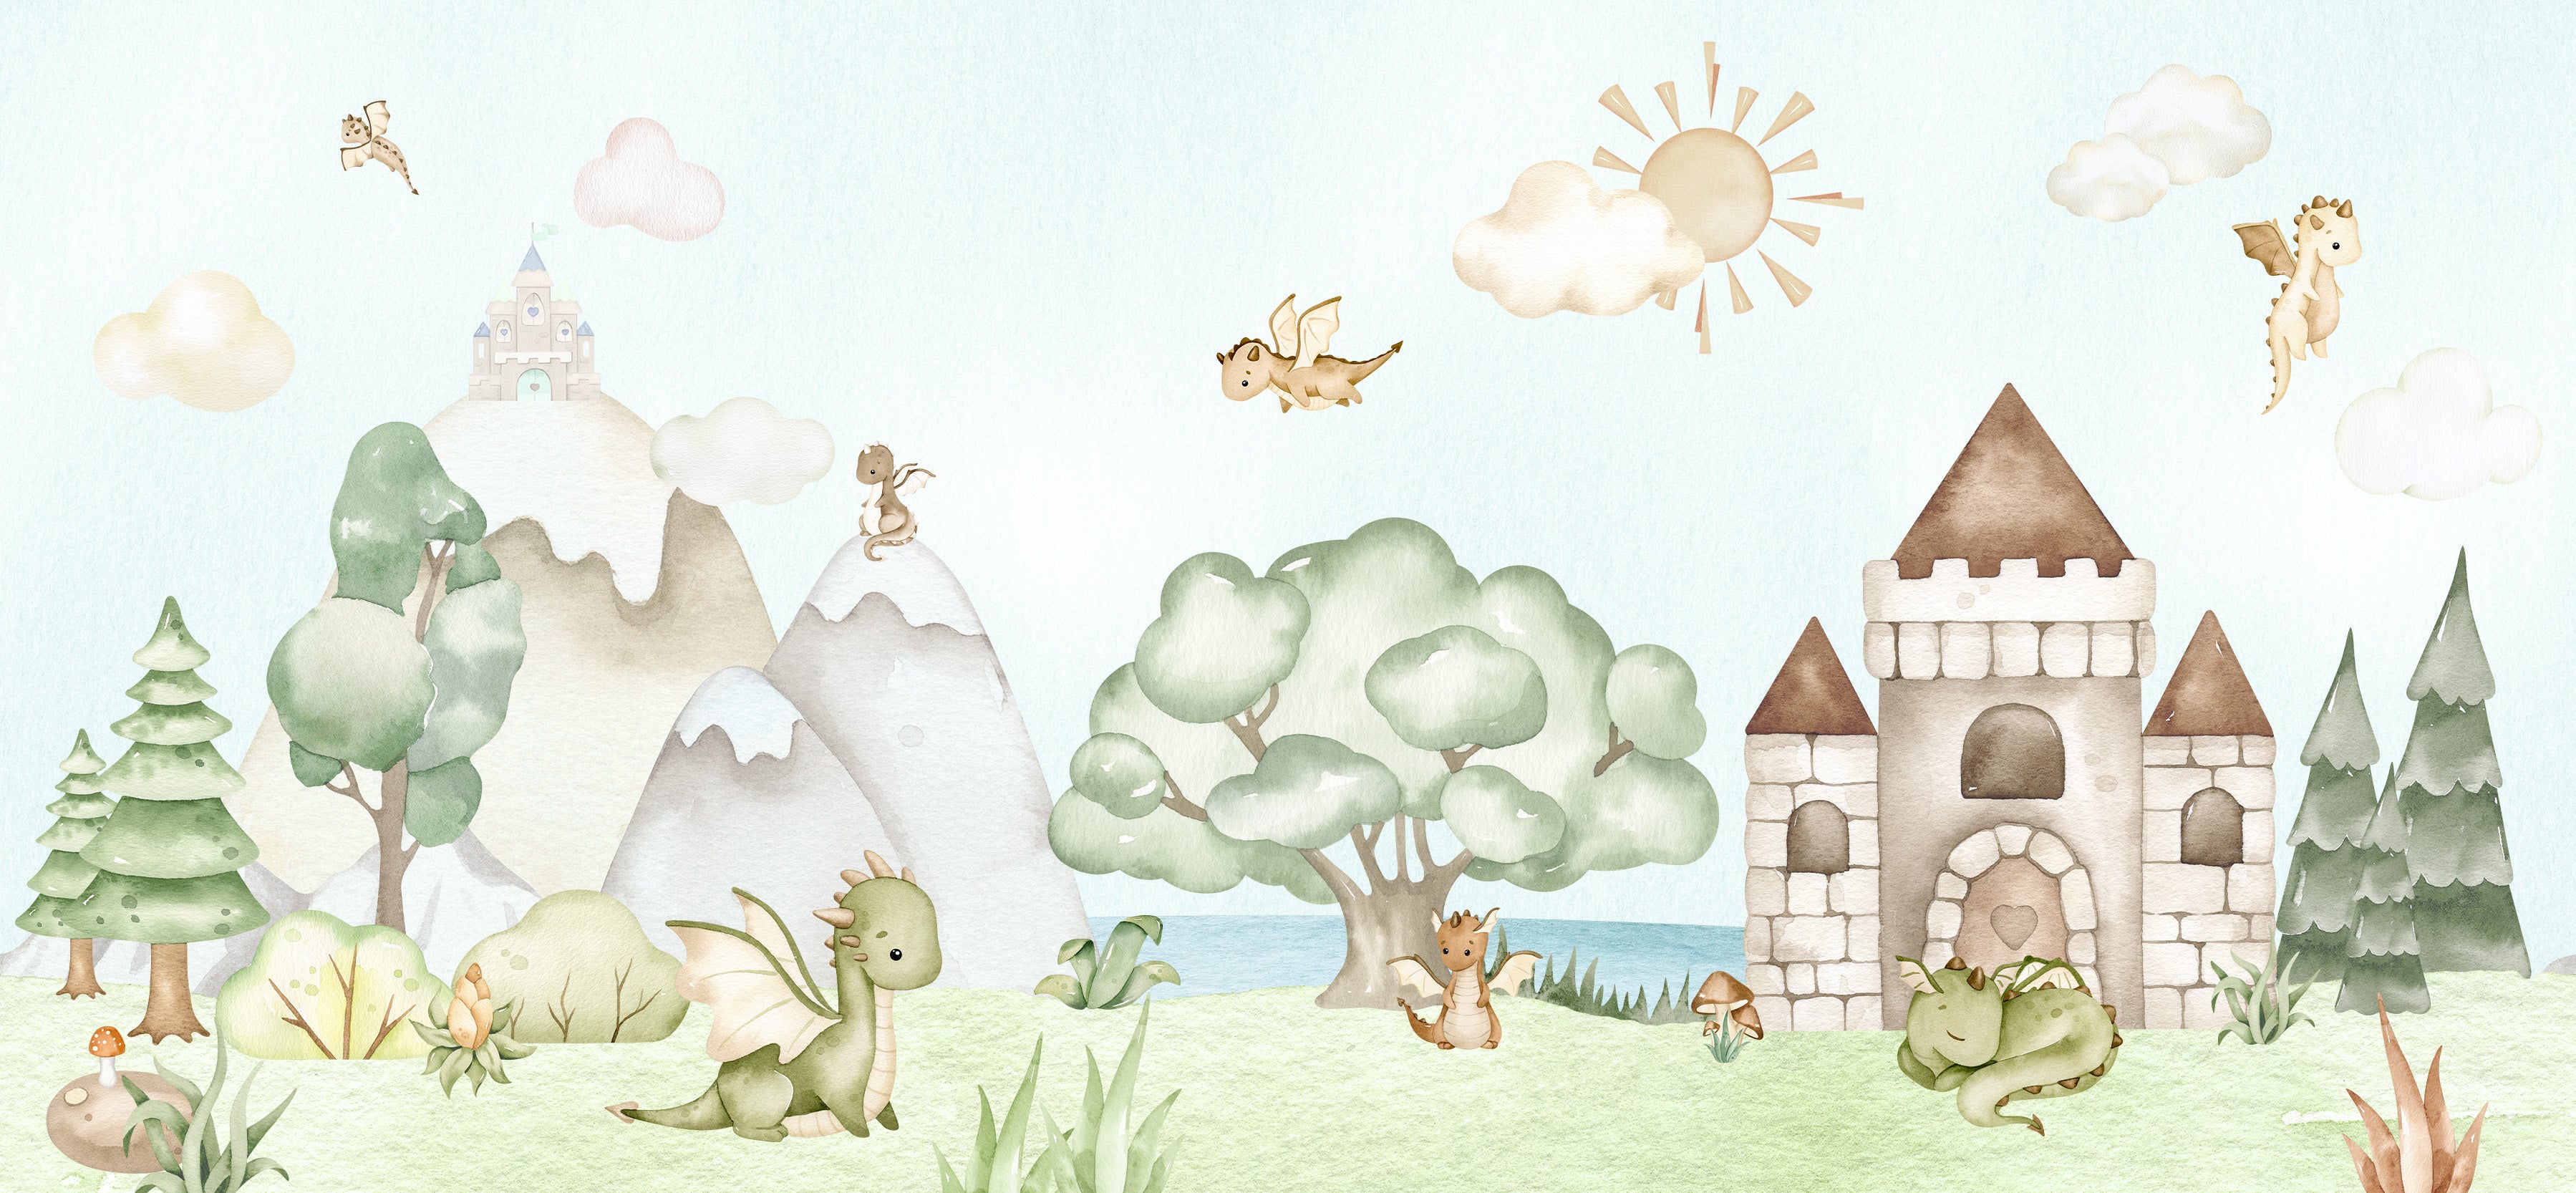 Lancelot Watercolour Storybook Dragon Illustration Wallpaper Mural Full Artwork